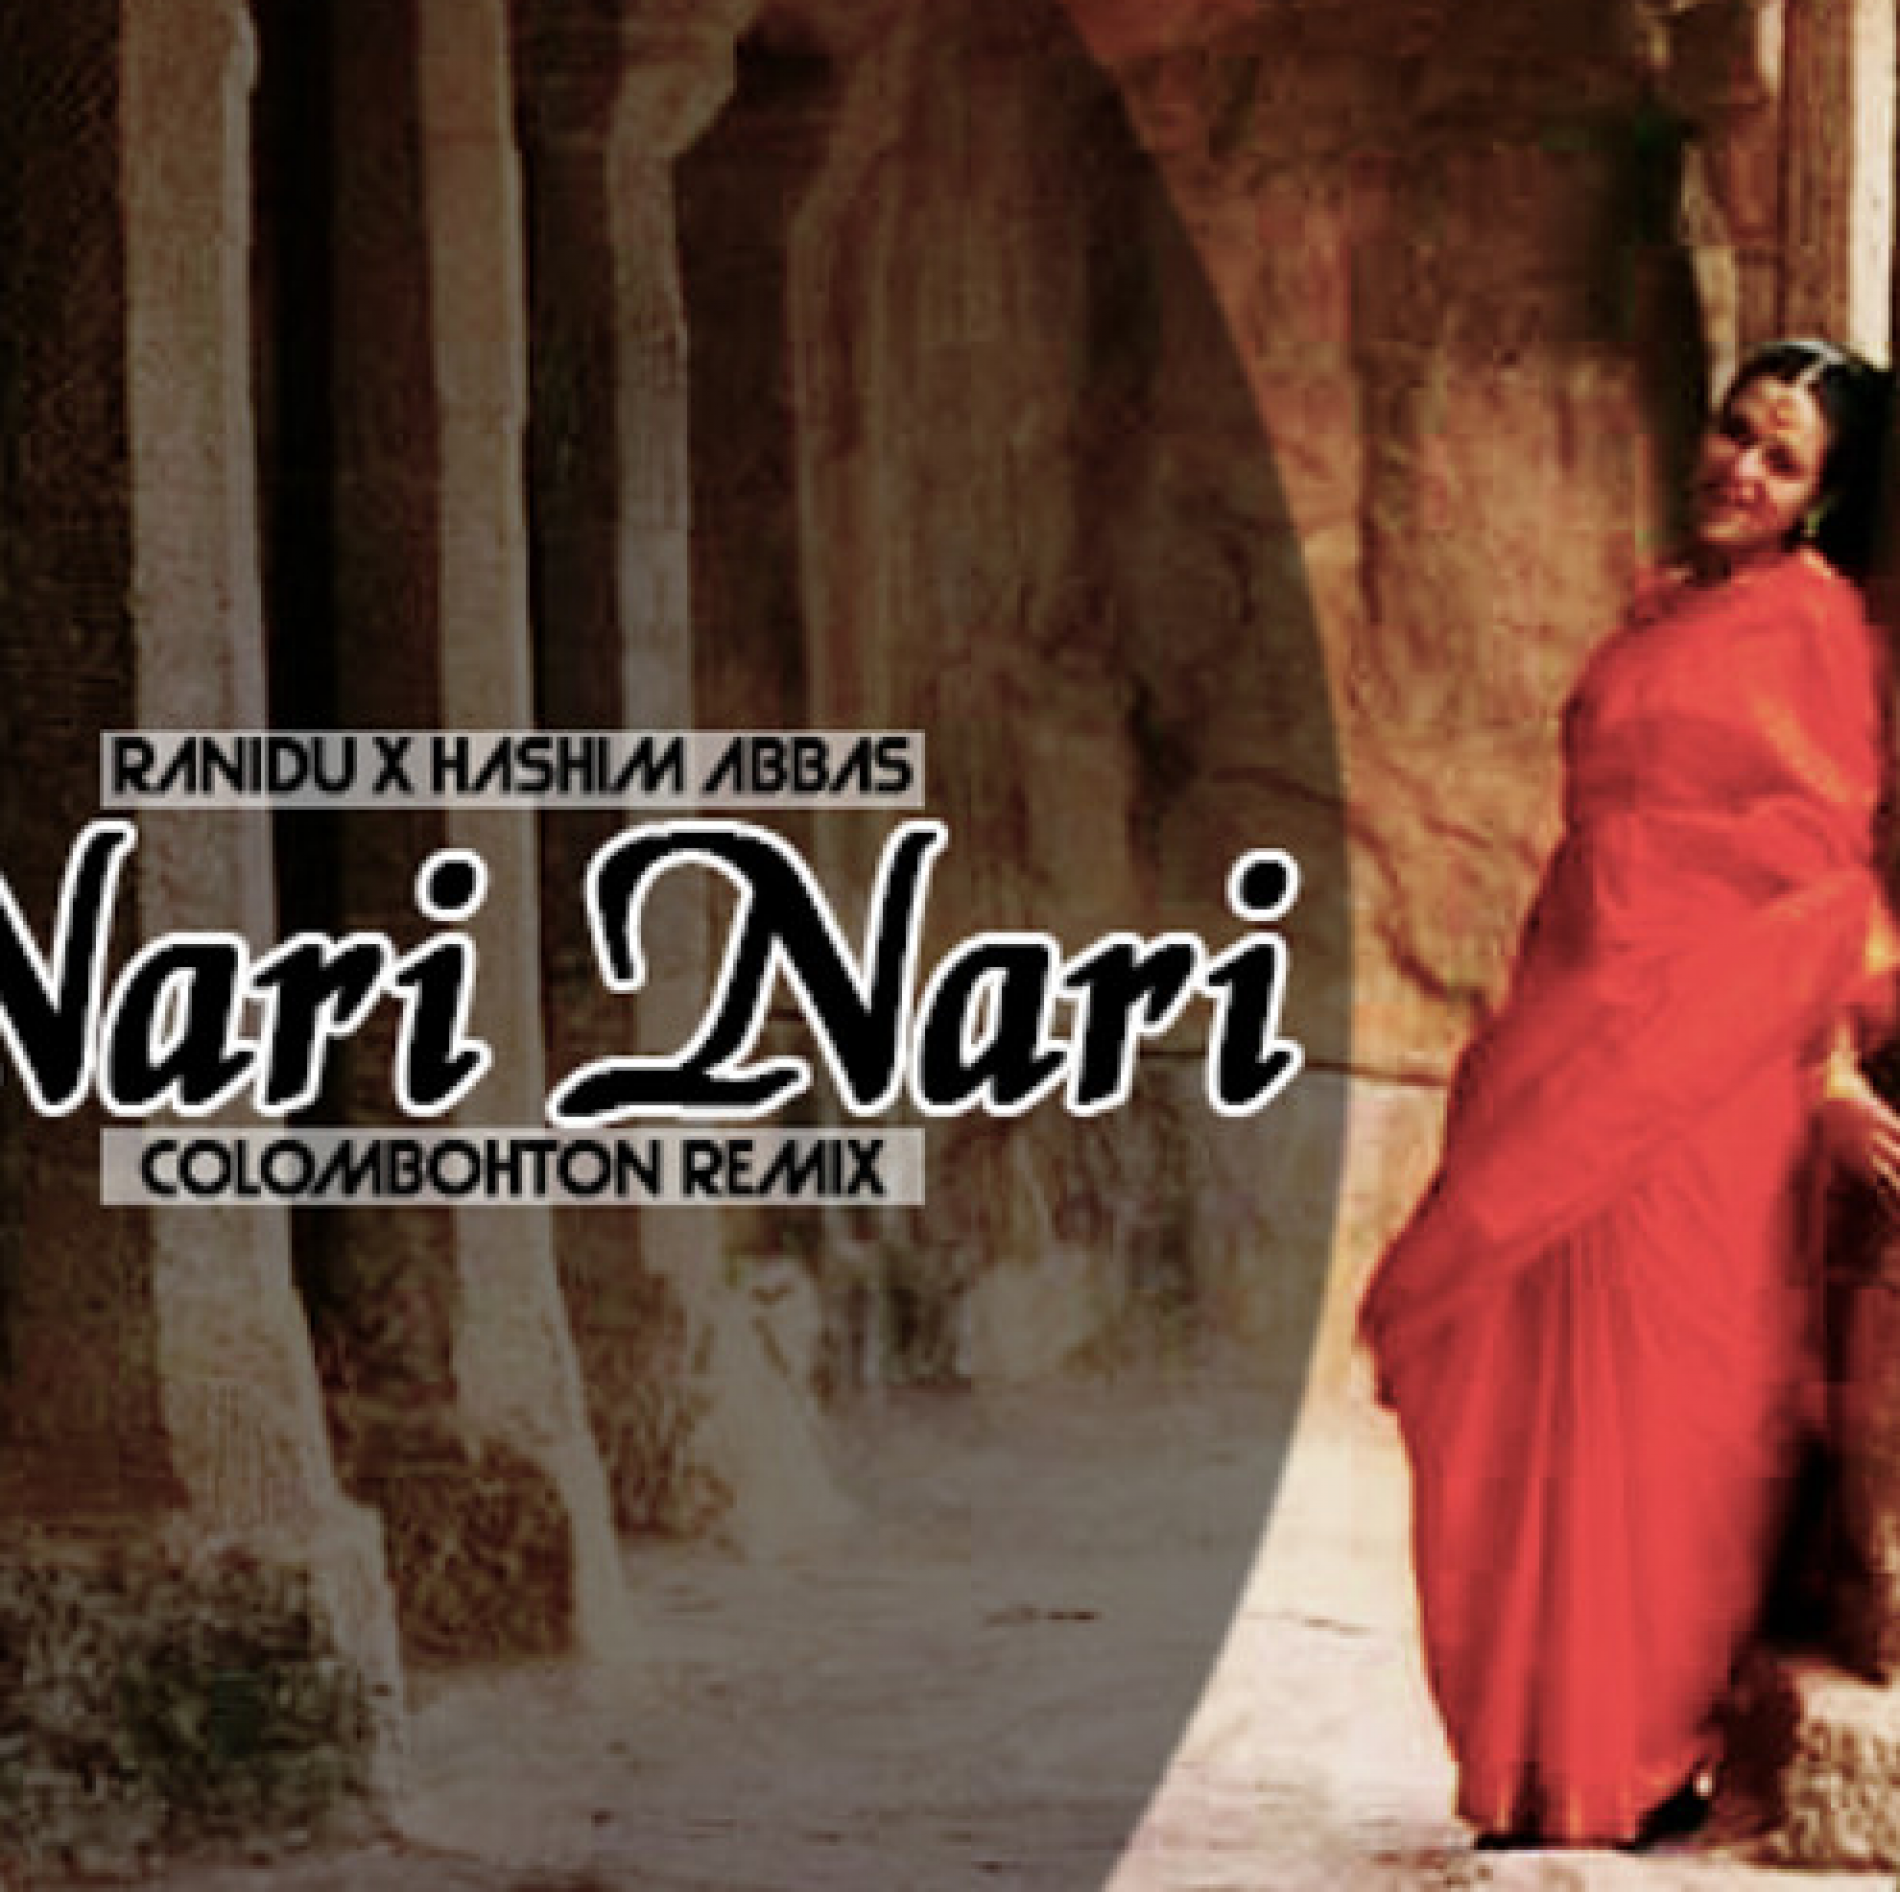 Ranidu X Hashim Abbas – Nari Nari (Ranidu’s Colombohton Remix)